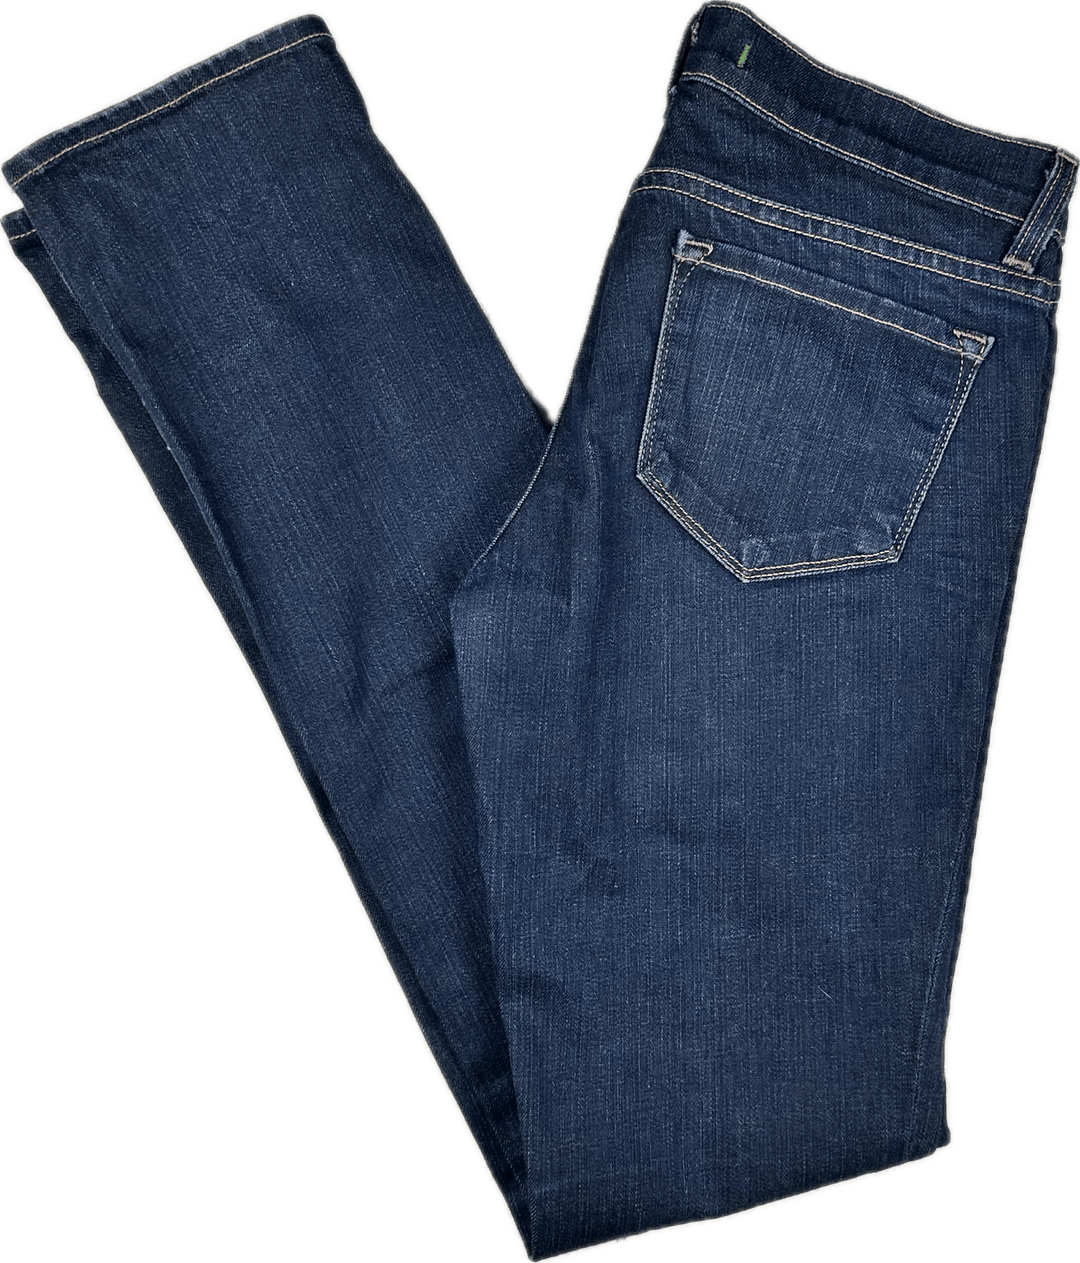 J Brand 'Skinny Leg' Low Rise Jeans in Dark Ink Wash- Size 26 - Jean Pool